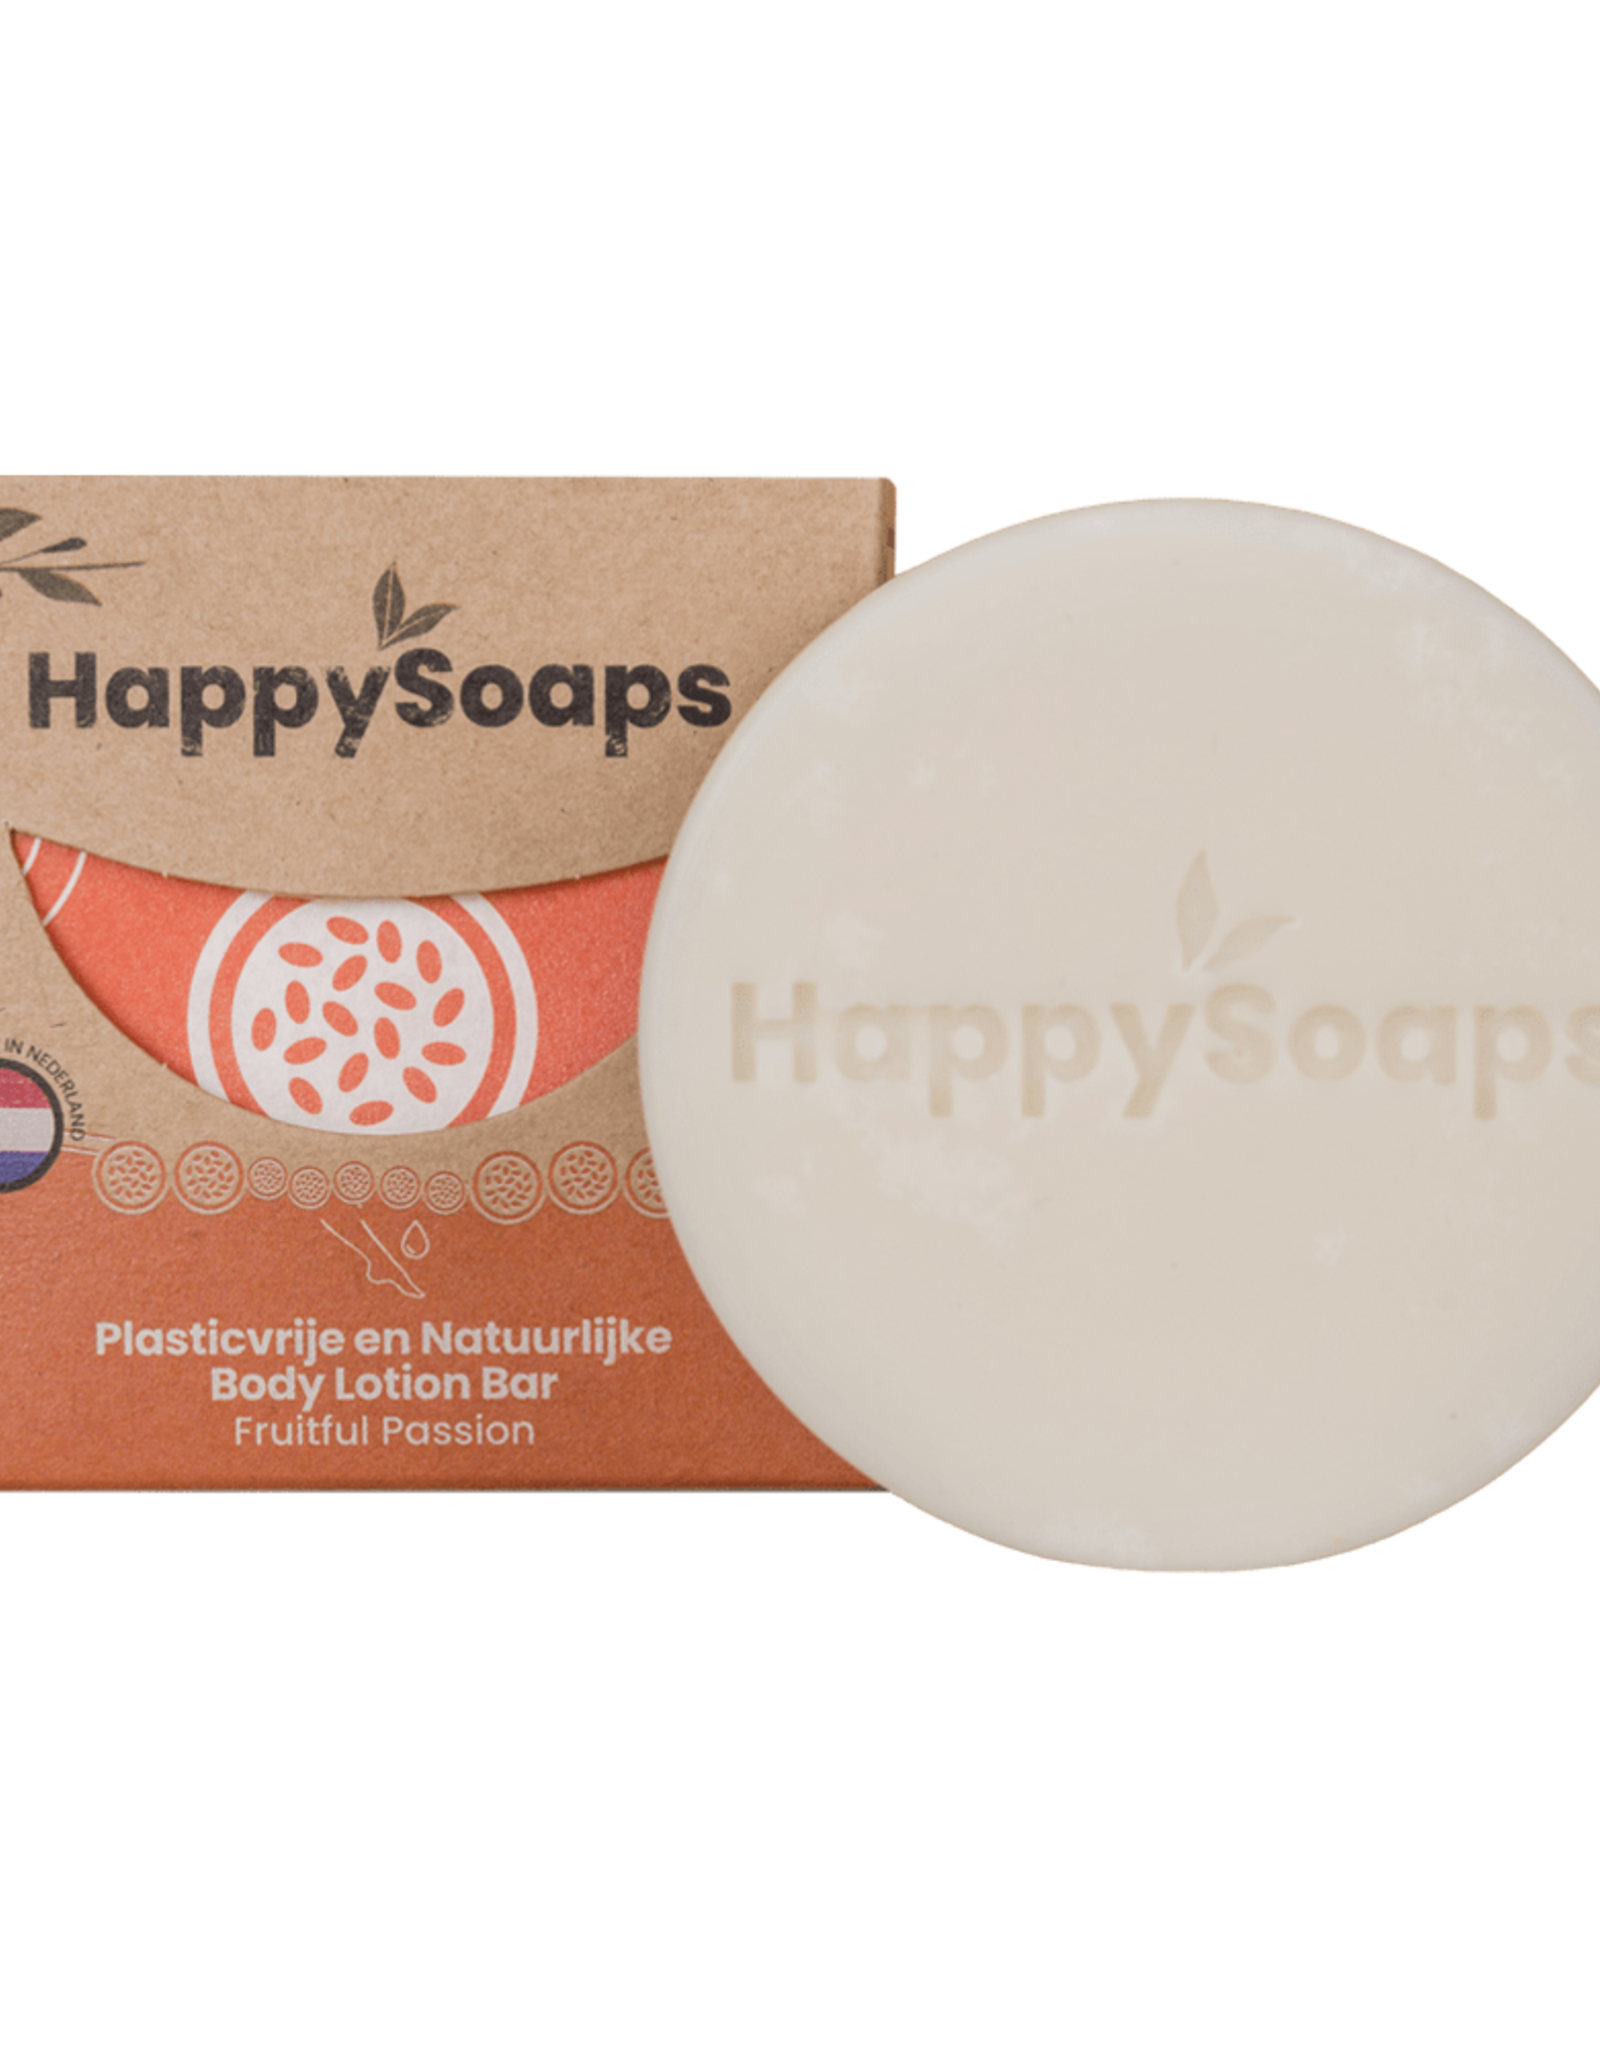 HappySoaps Body Lotion Bar Fruitfull Passion - HappySoaps